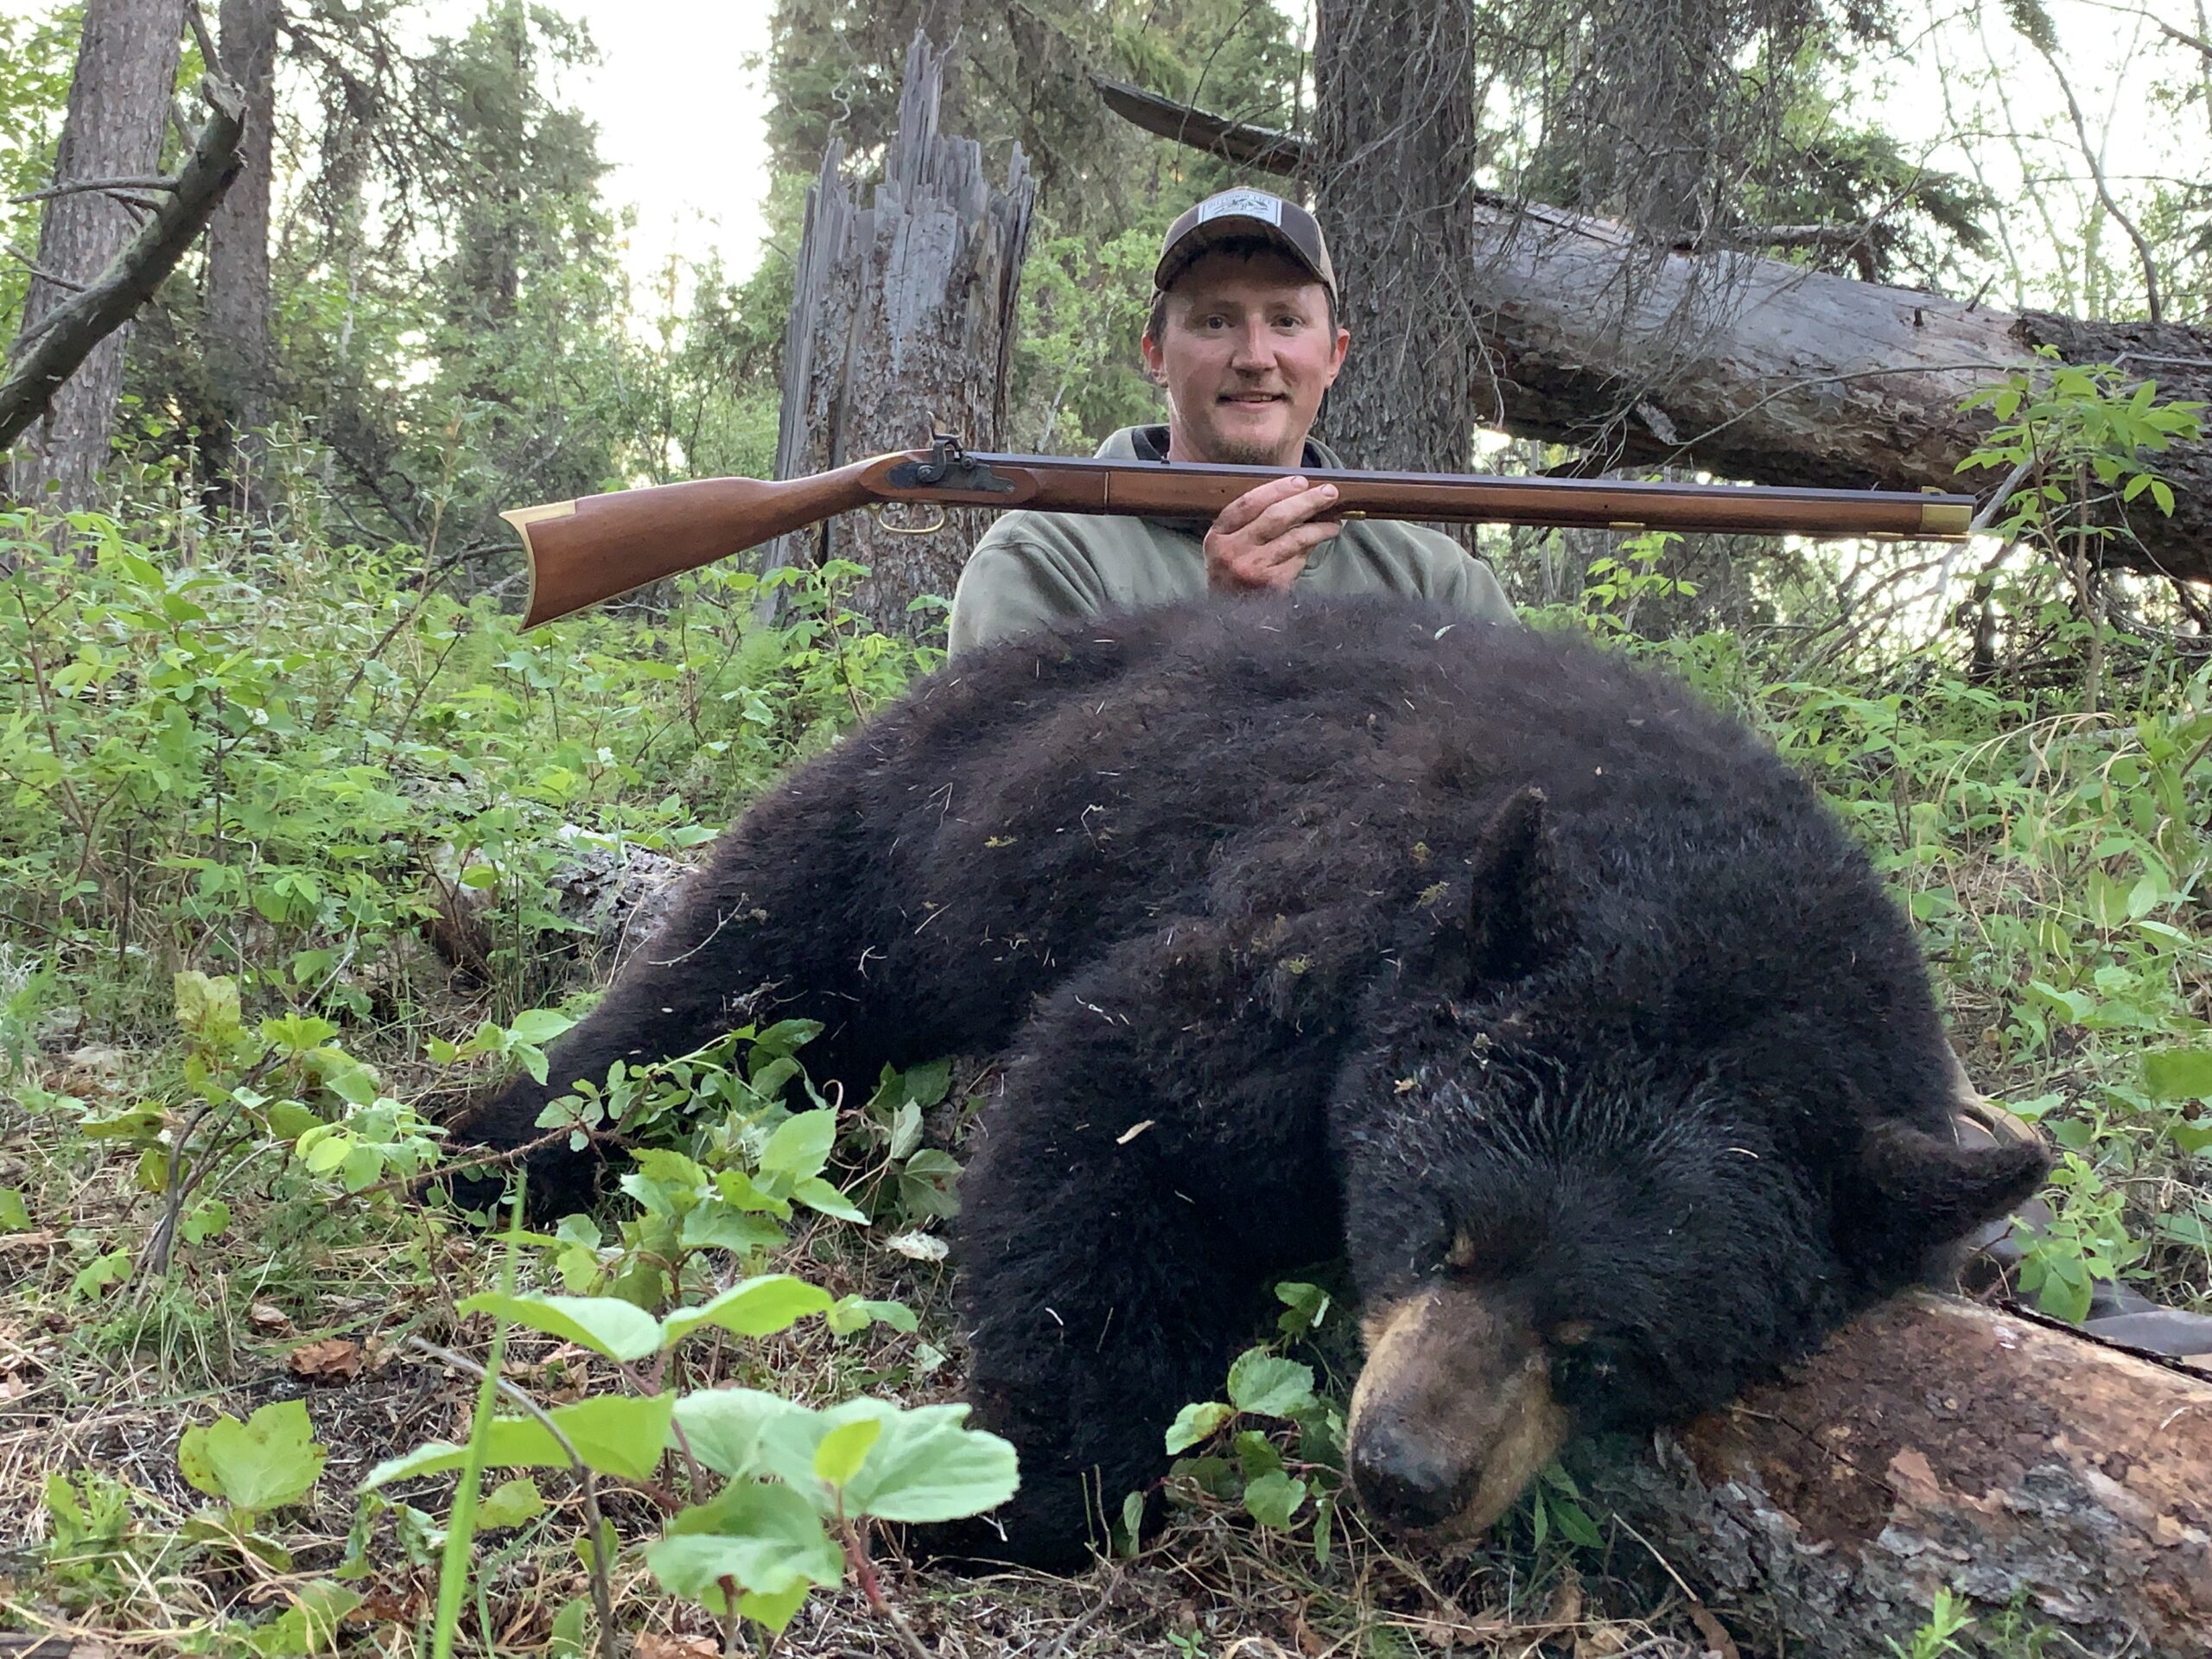 Freel with Alaskan black bear